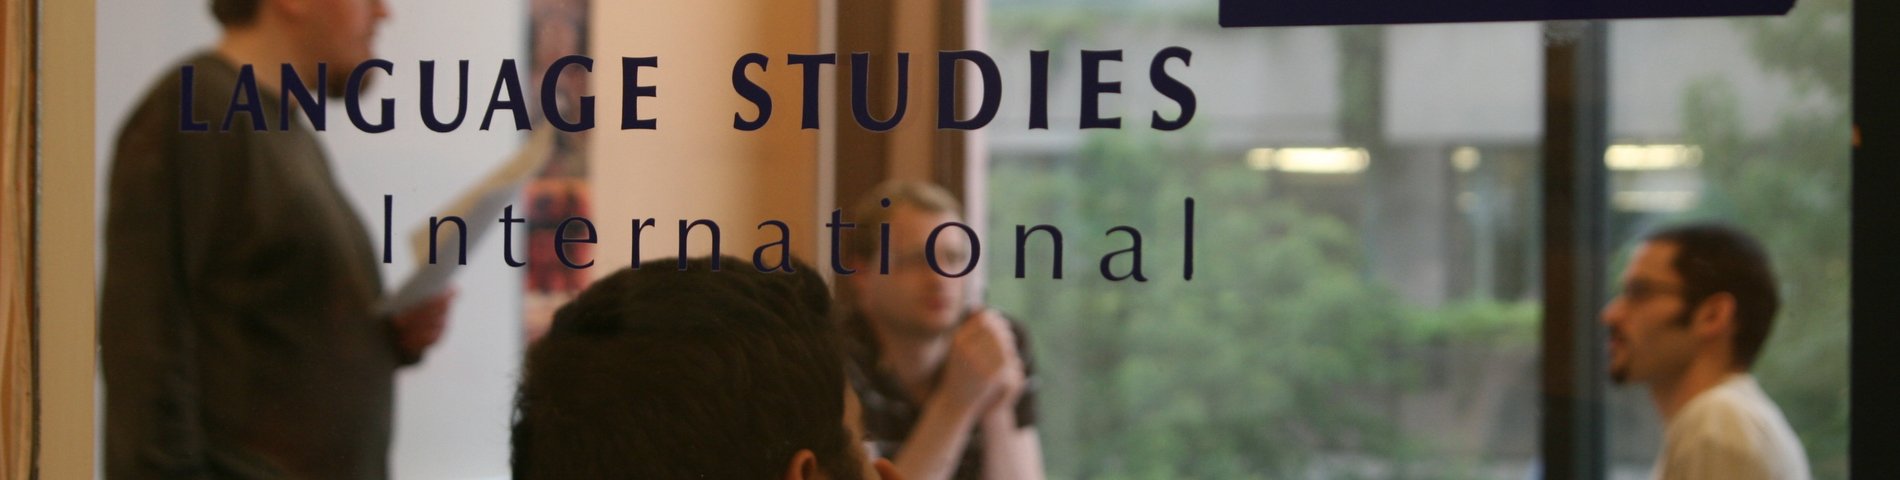 LSI - Language Studies International Bild 1